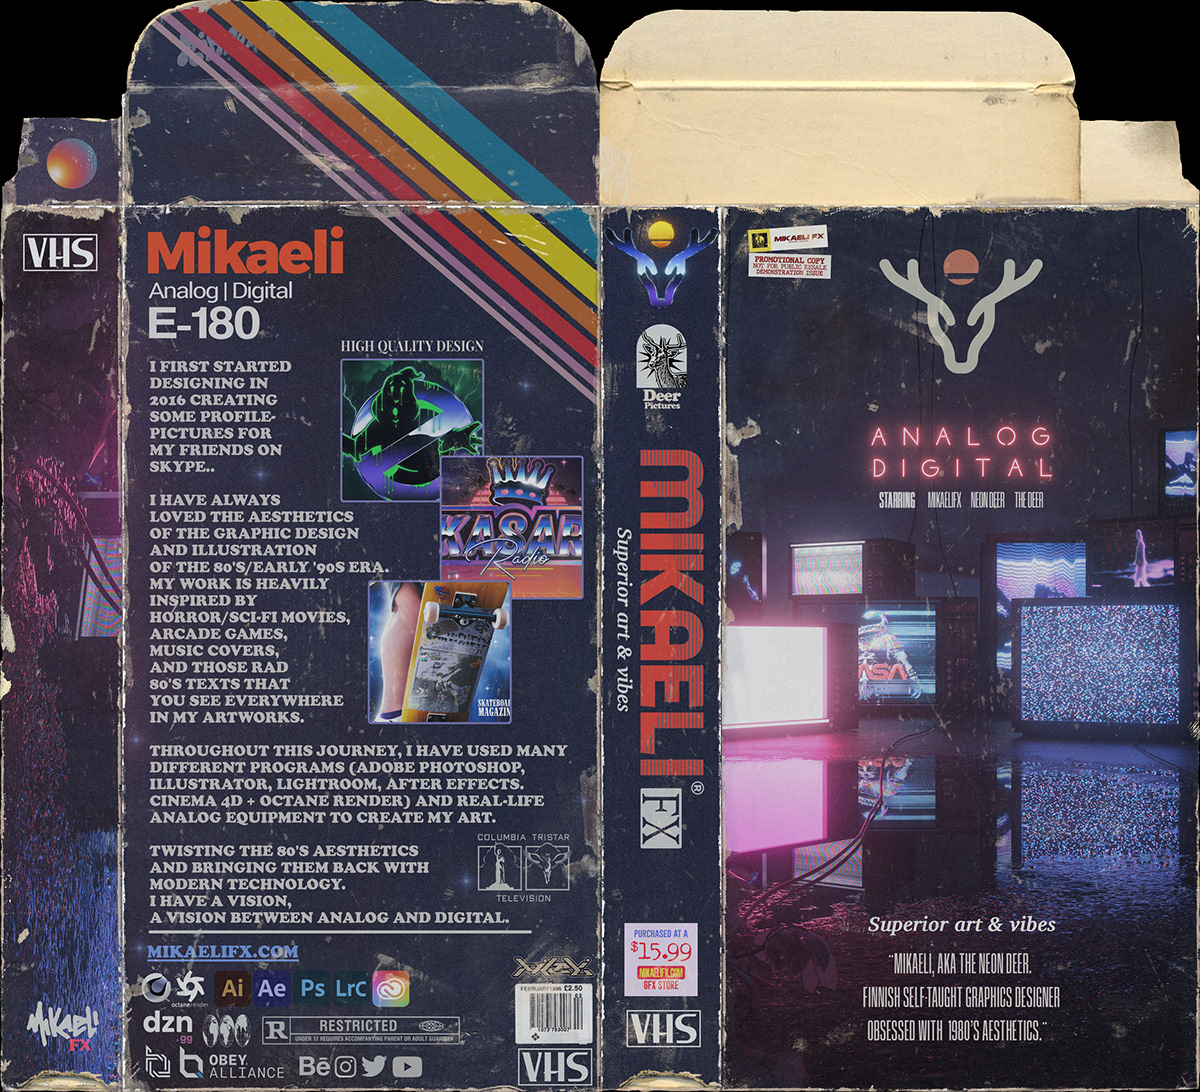 1980s 80s old packaking Retro Synthwave vhs VHS cassette vhs cover vintage